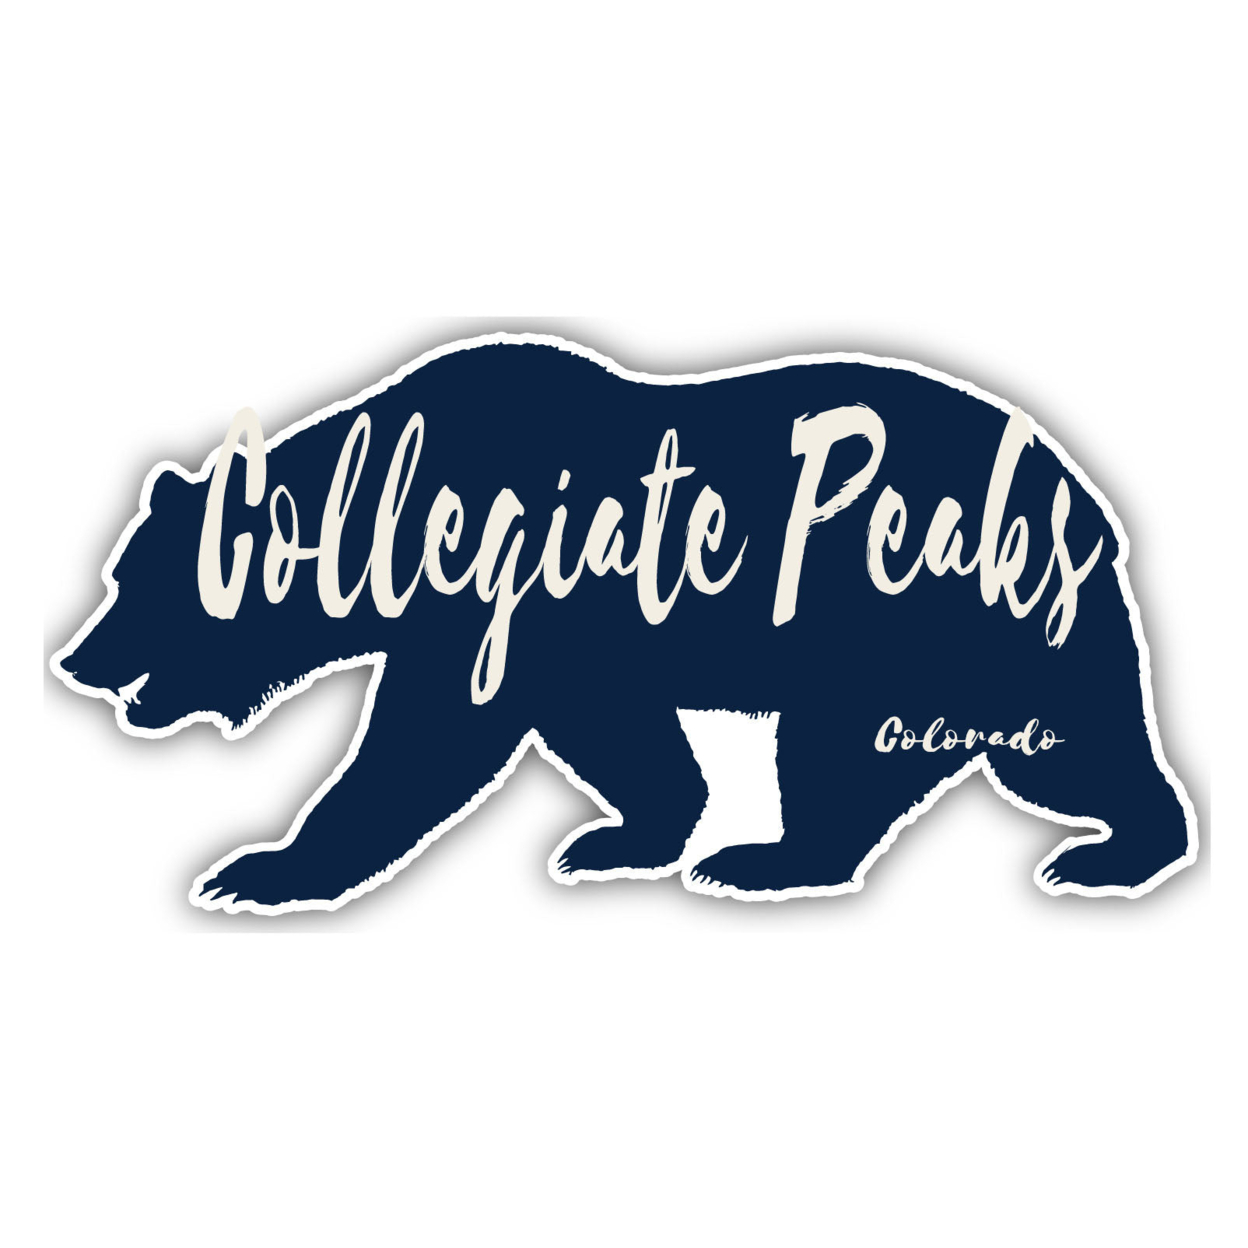 Collegiate Peaks Colorado Souvenir Decorative Stickers (Choose Theme And Size) - Single Unit, 2-Inch, Camp Life